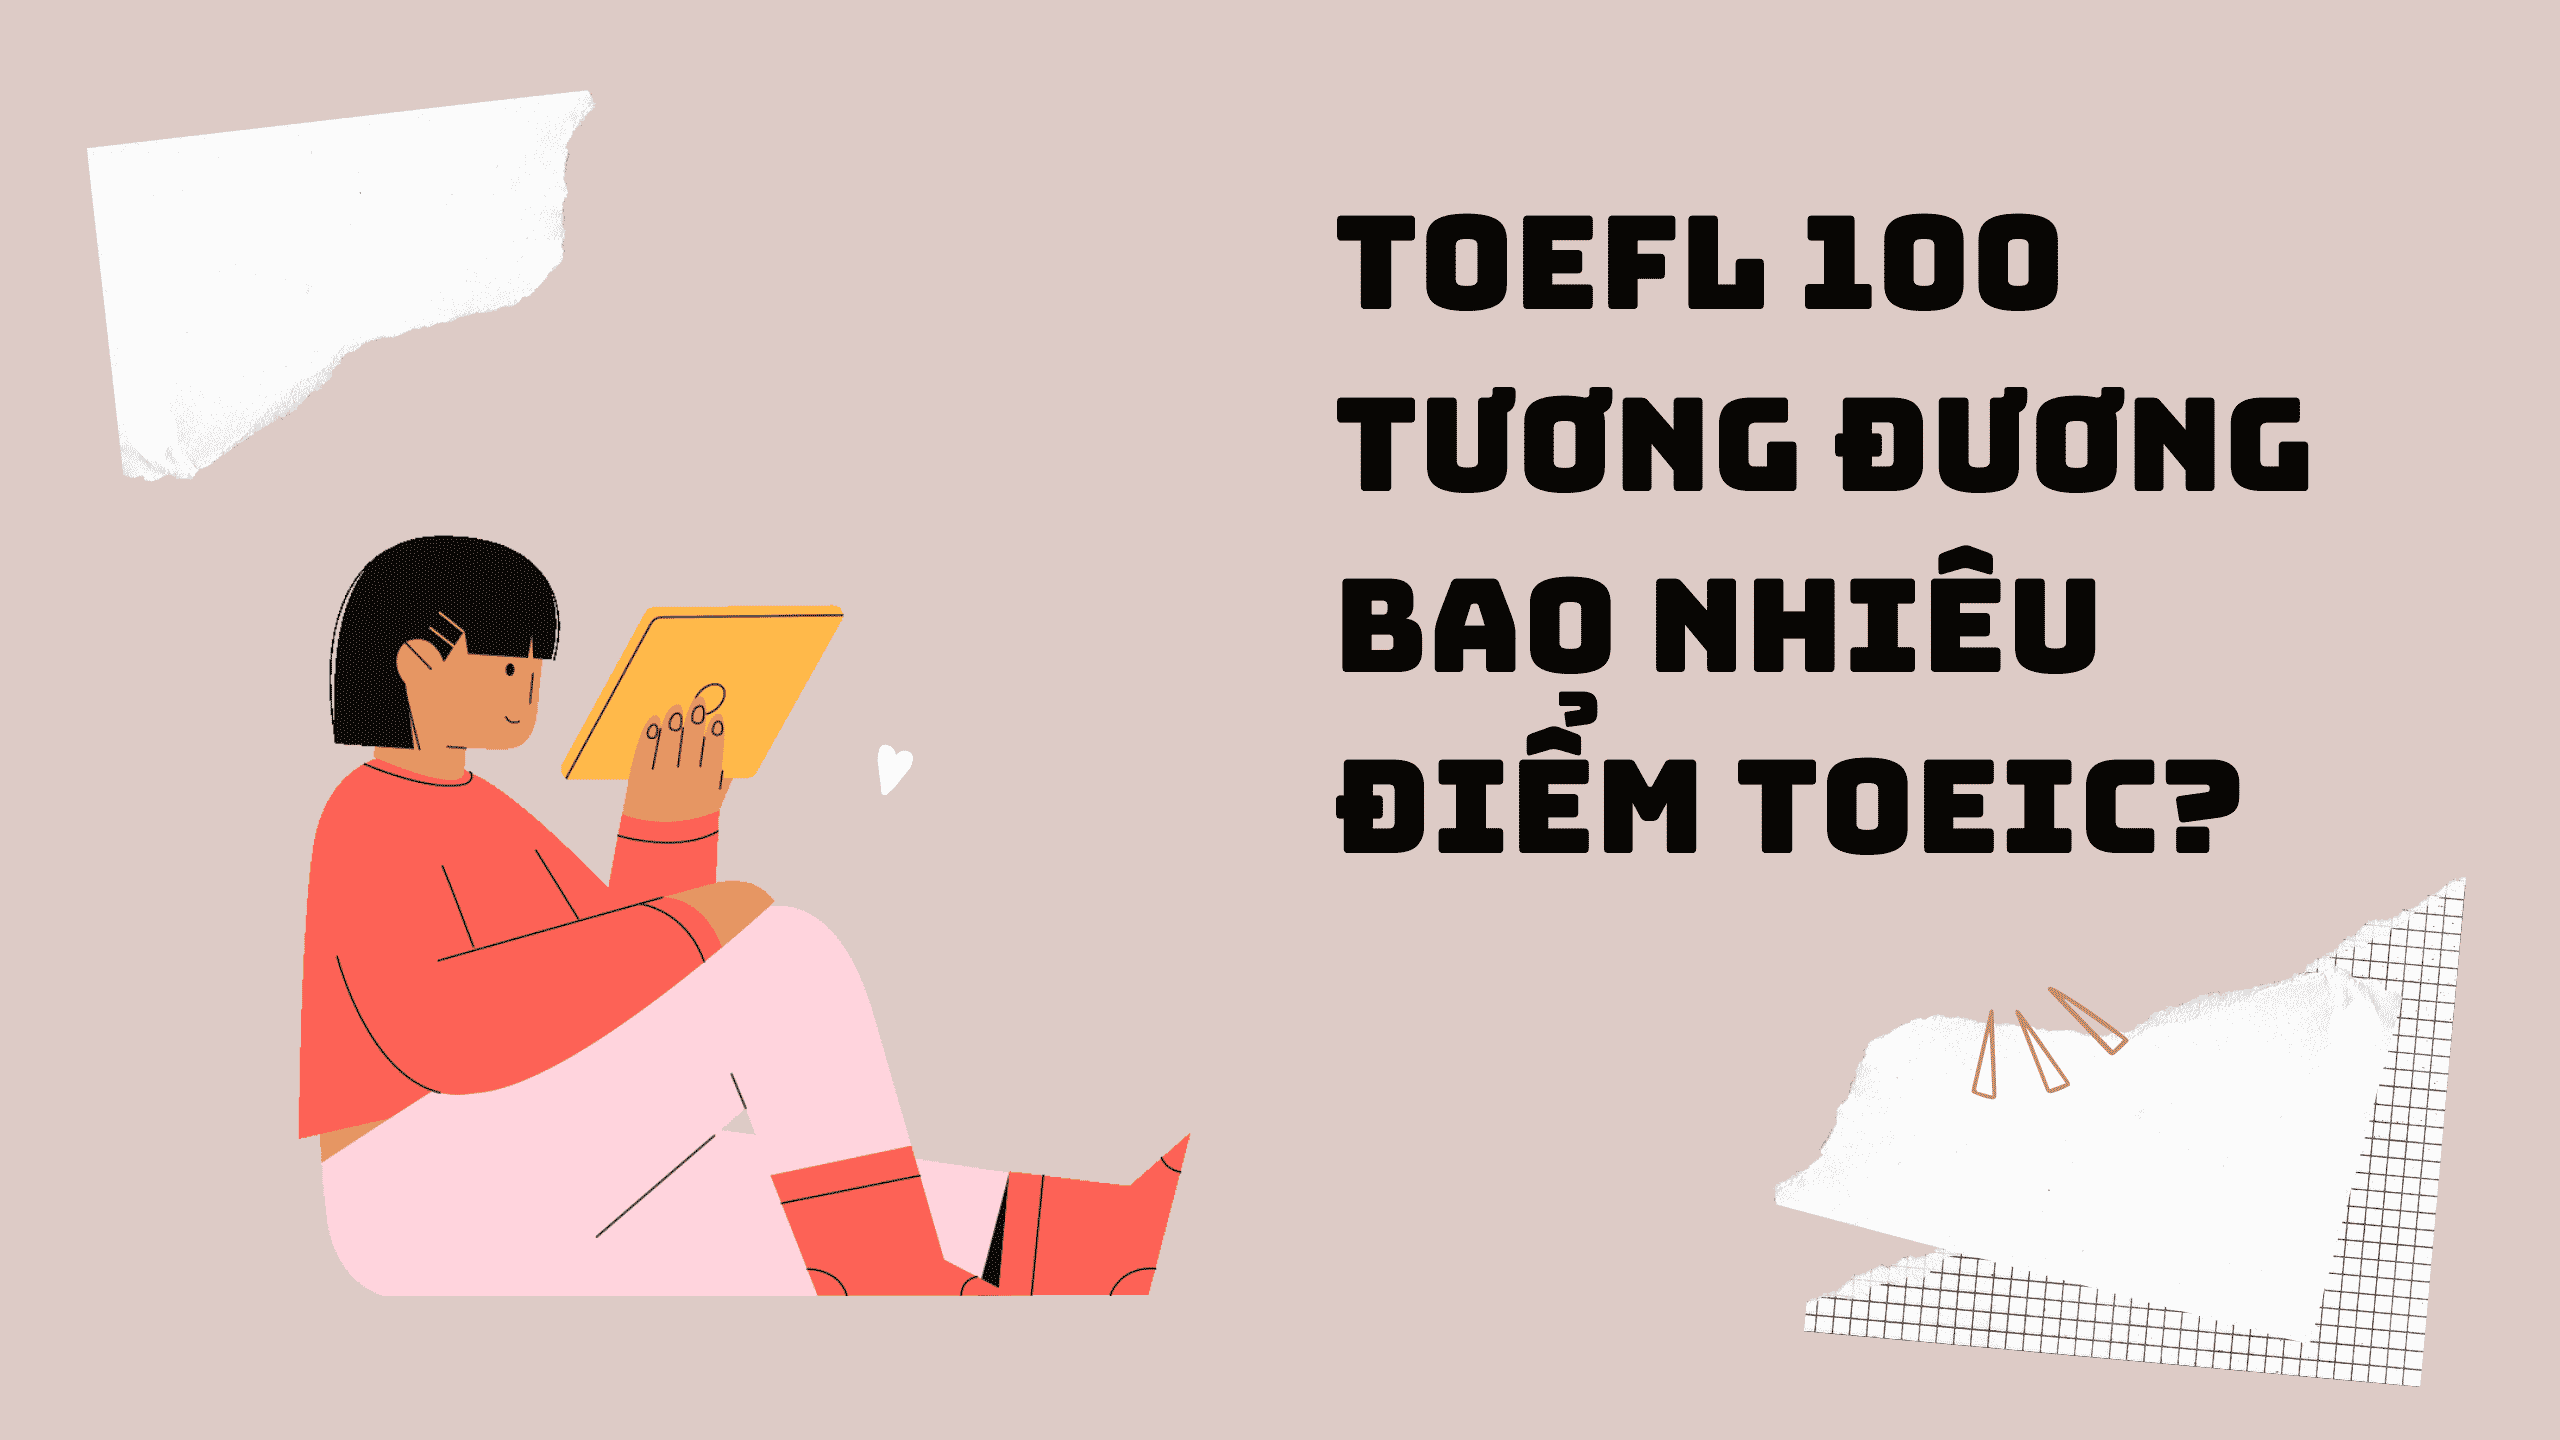 Toefl 100 Toeic